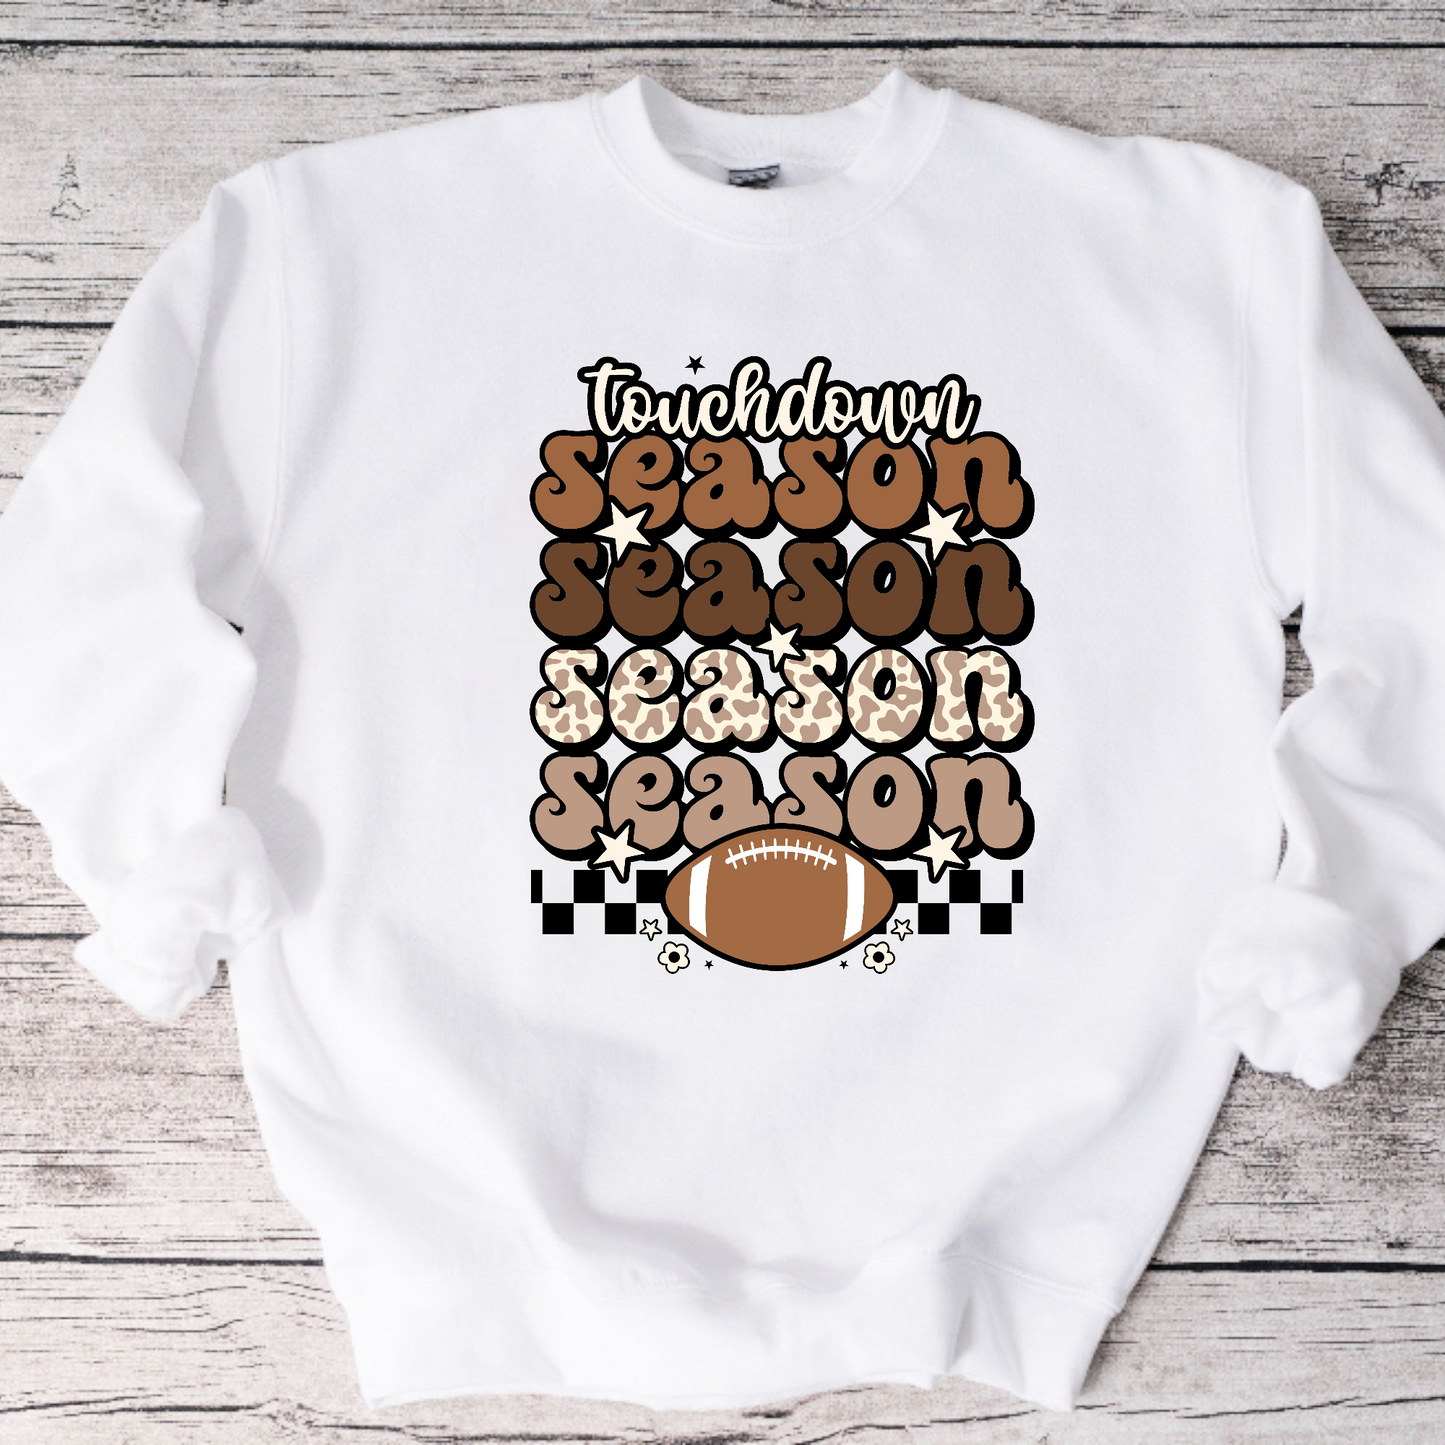 Retro Touchdown Season  Crewneck Sweatshirt or Tee